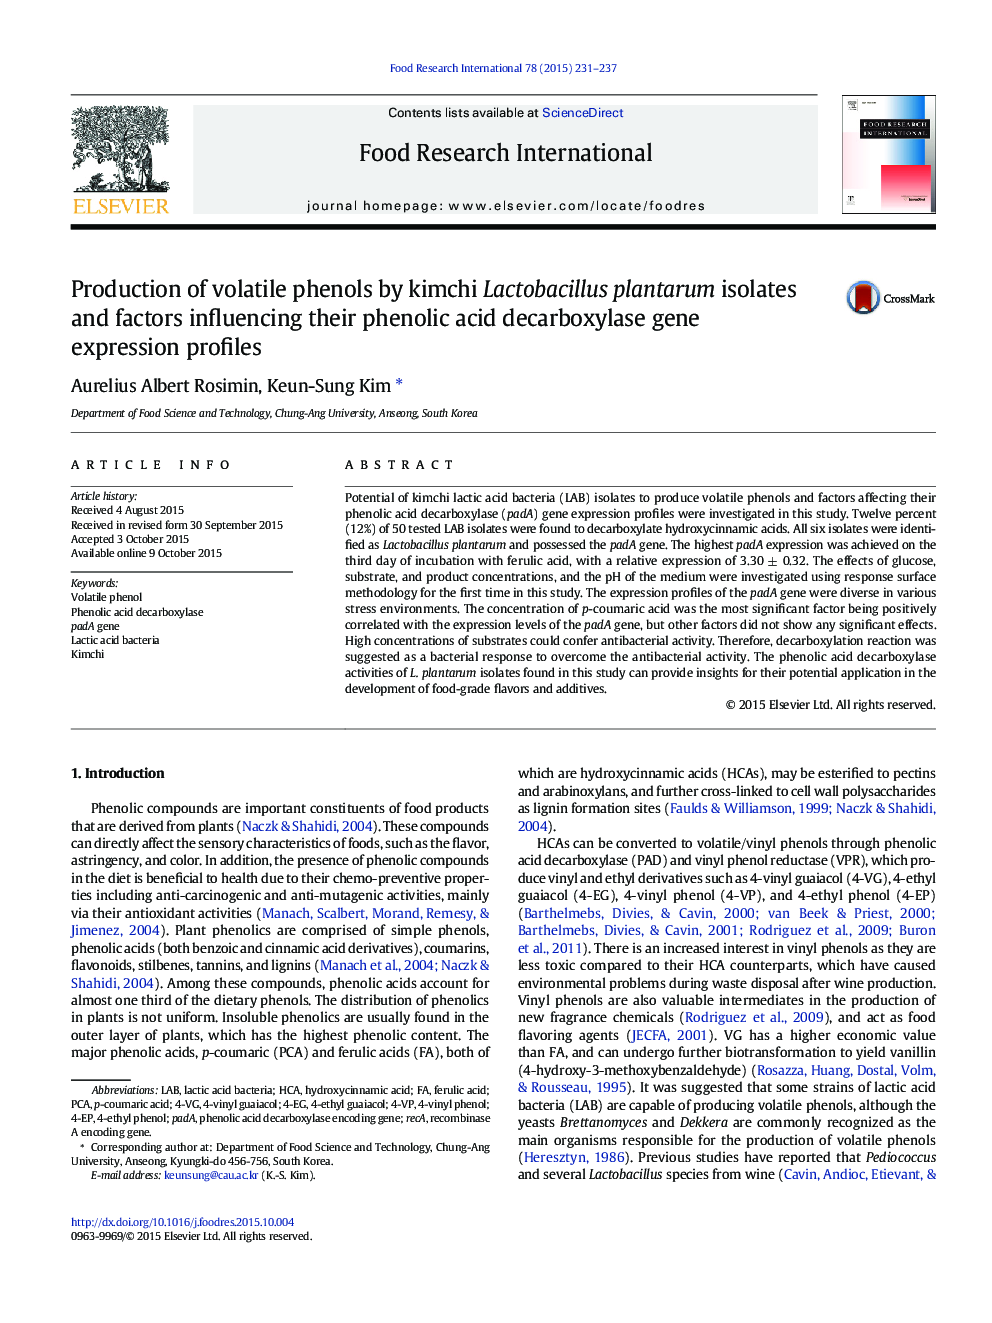 Production of volatile phenols by kimchi Lactobacillus plantarum isolates and factors influencing their phenolic acid decarboxylase gene expression profiles